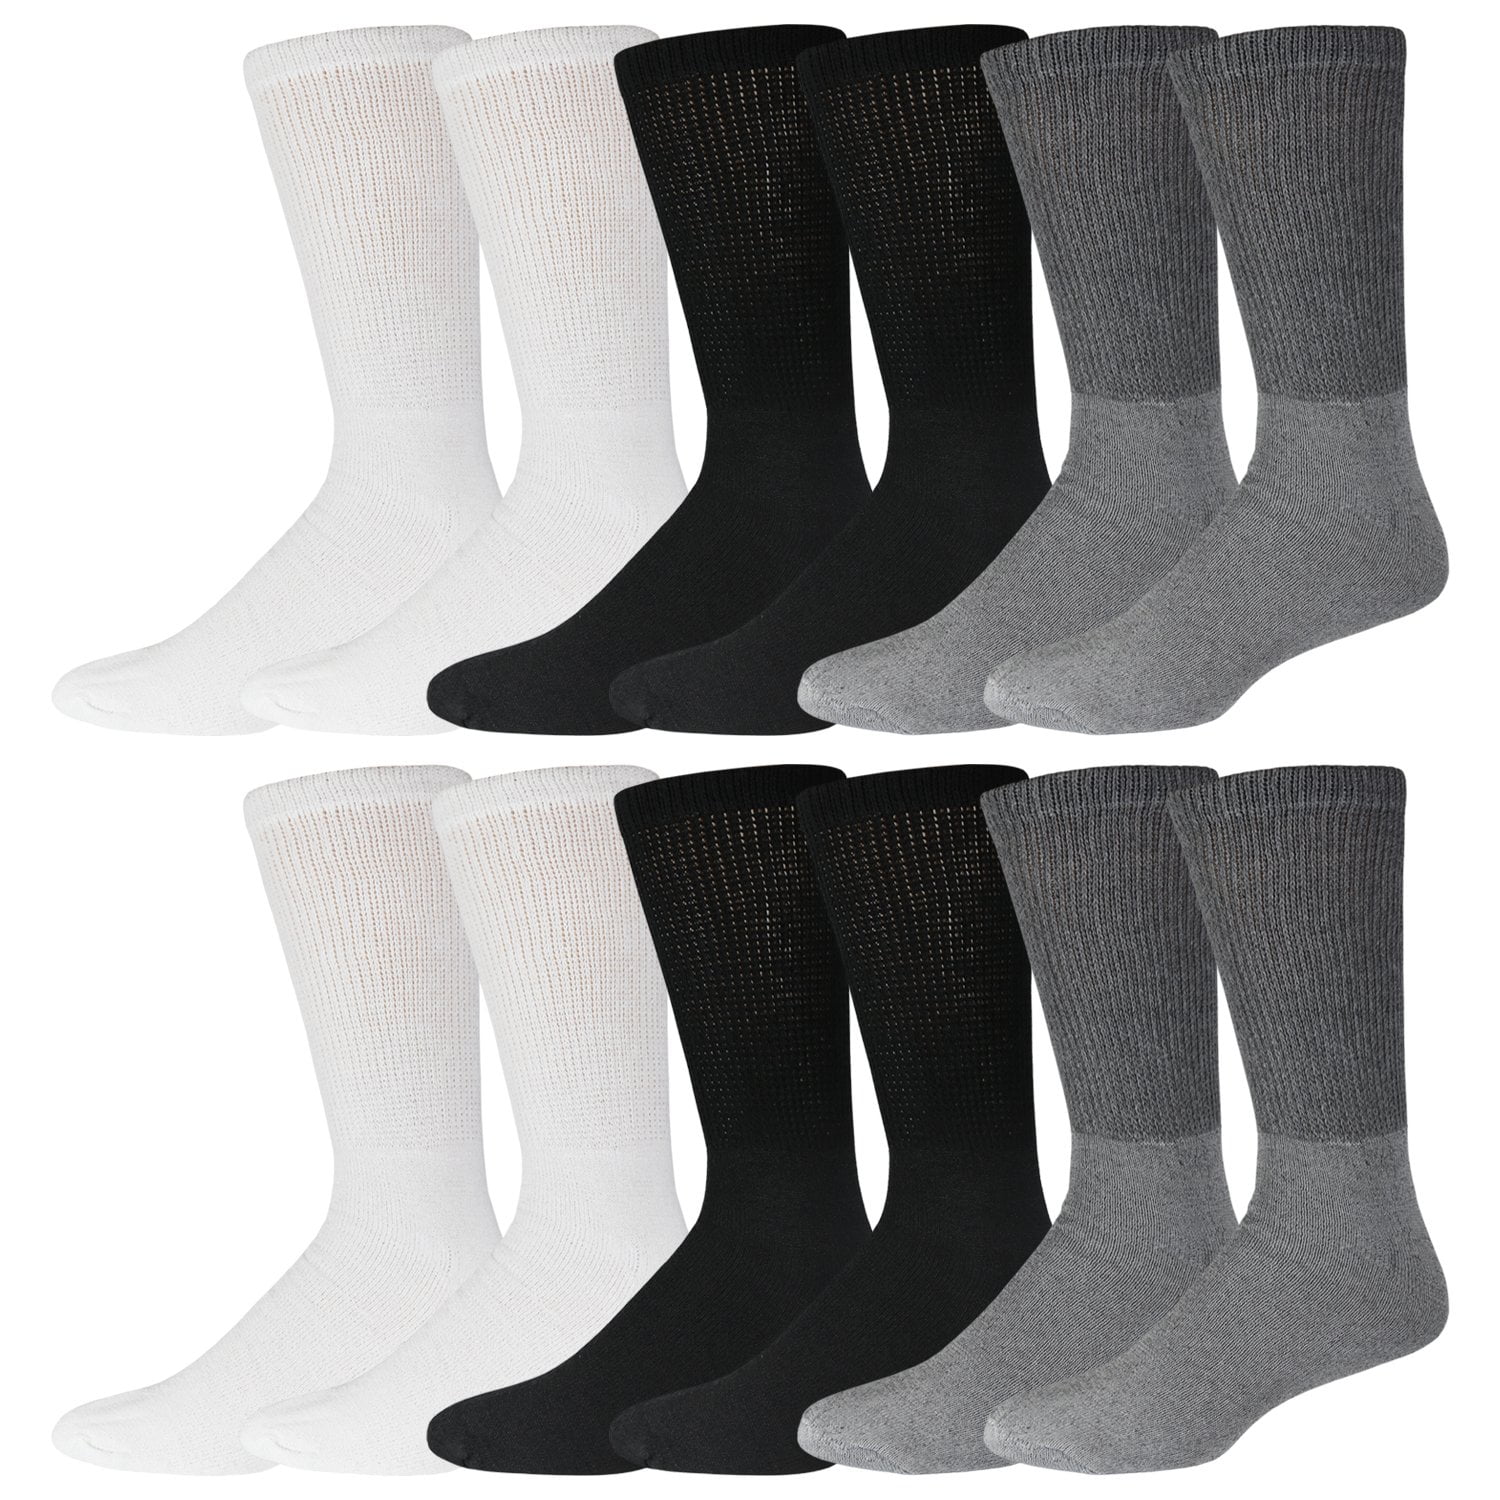 12 Pairs of Big and Tall Diabetic Cotton Neuropathy Crew Socks (Black ...